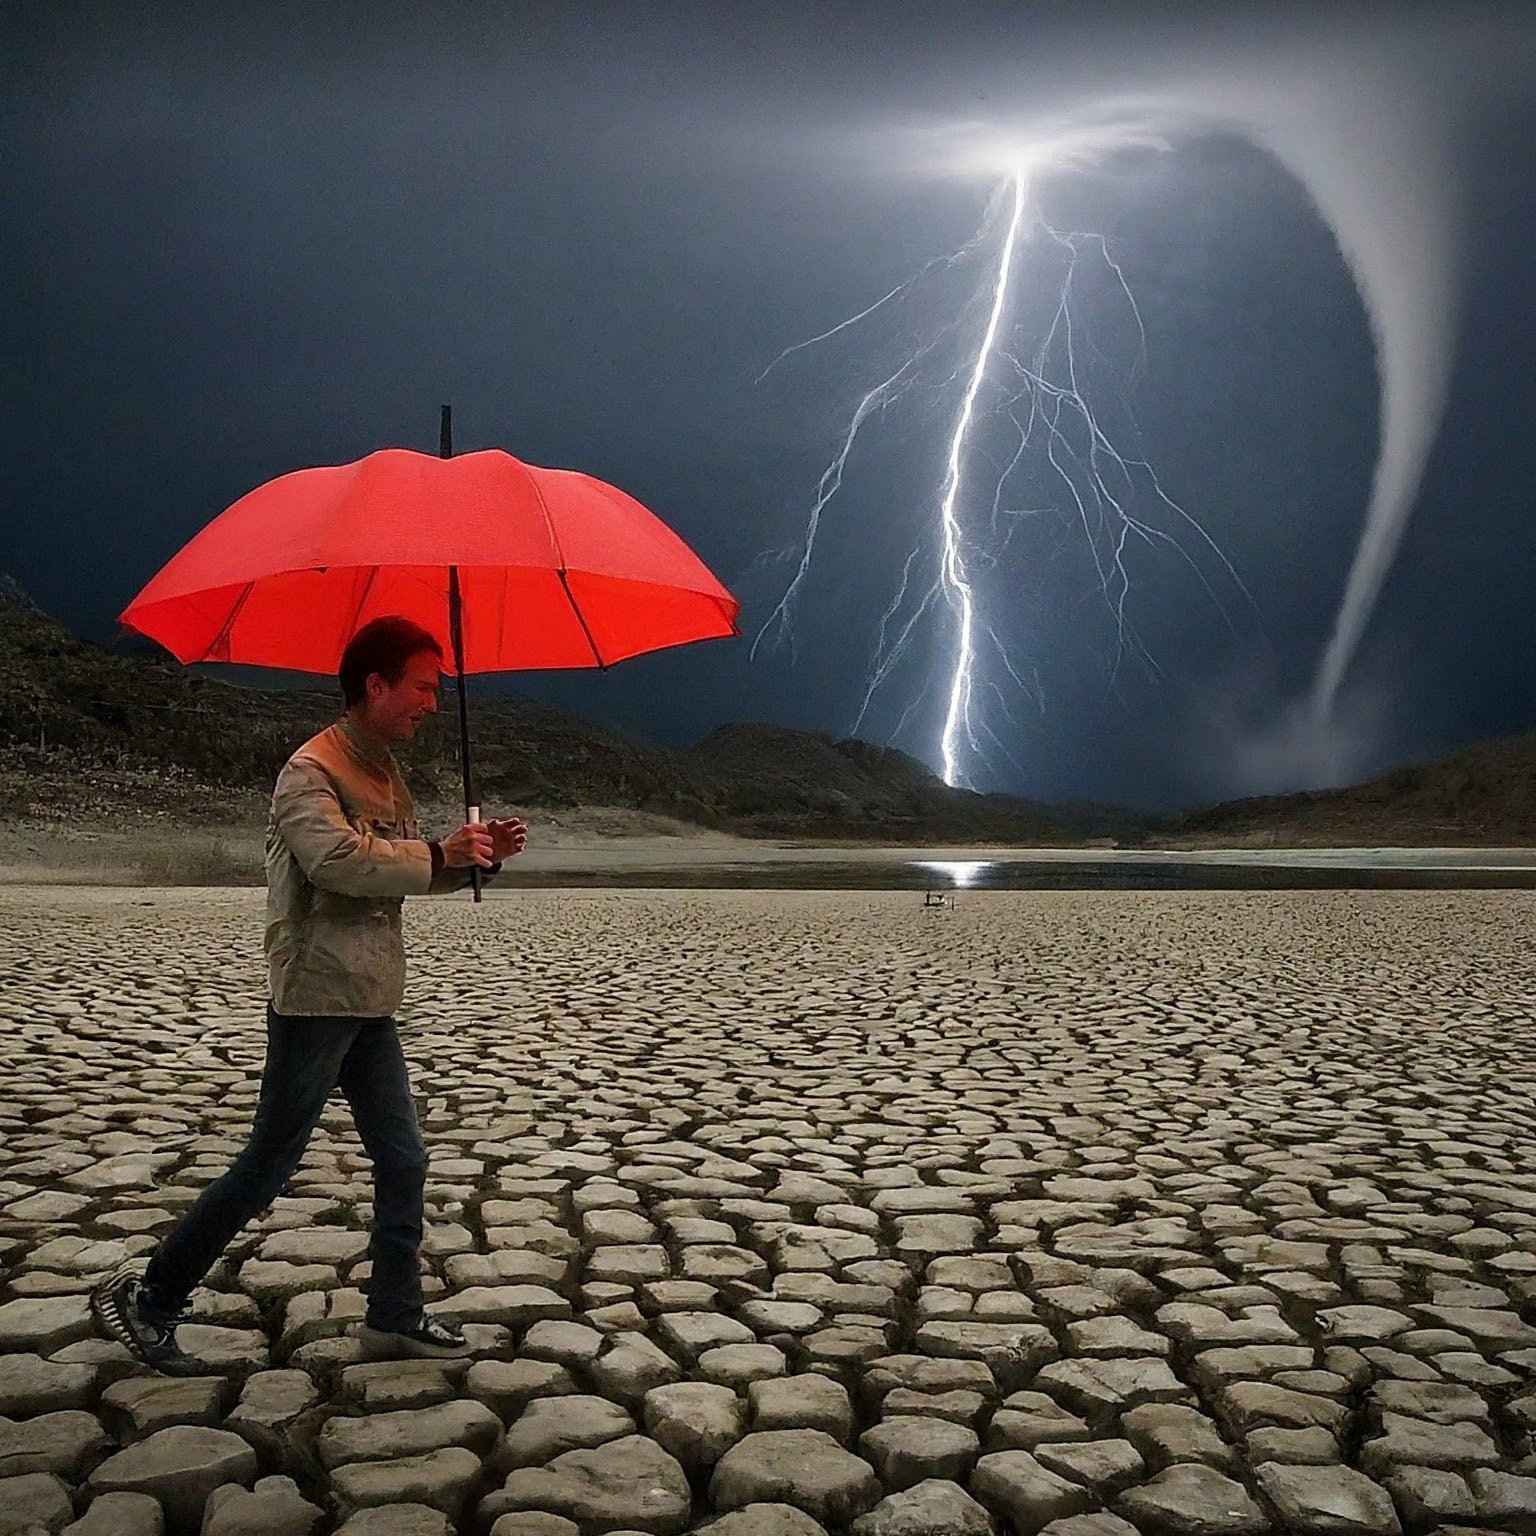 Man holding an umbrella in the desert